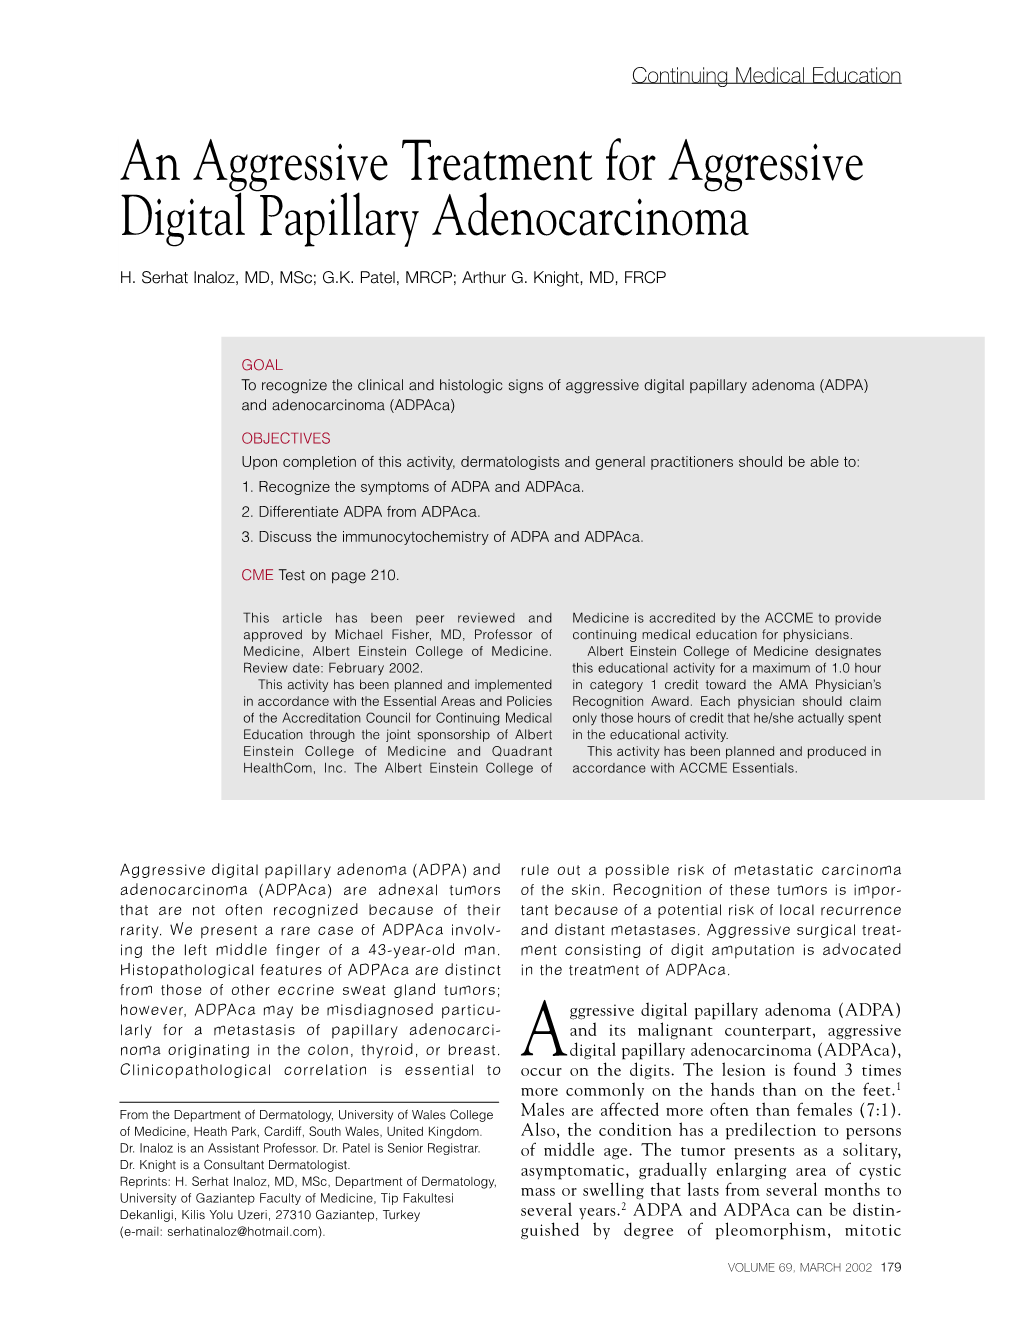 An Aggressive Treatment for Aggressive Digital Papillary Adenocarcinoma